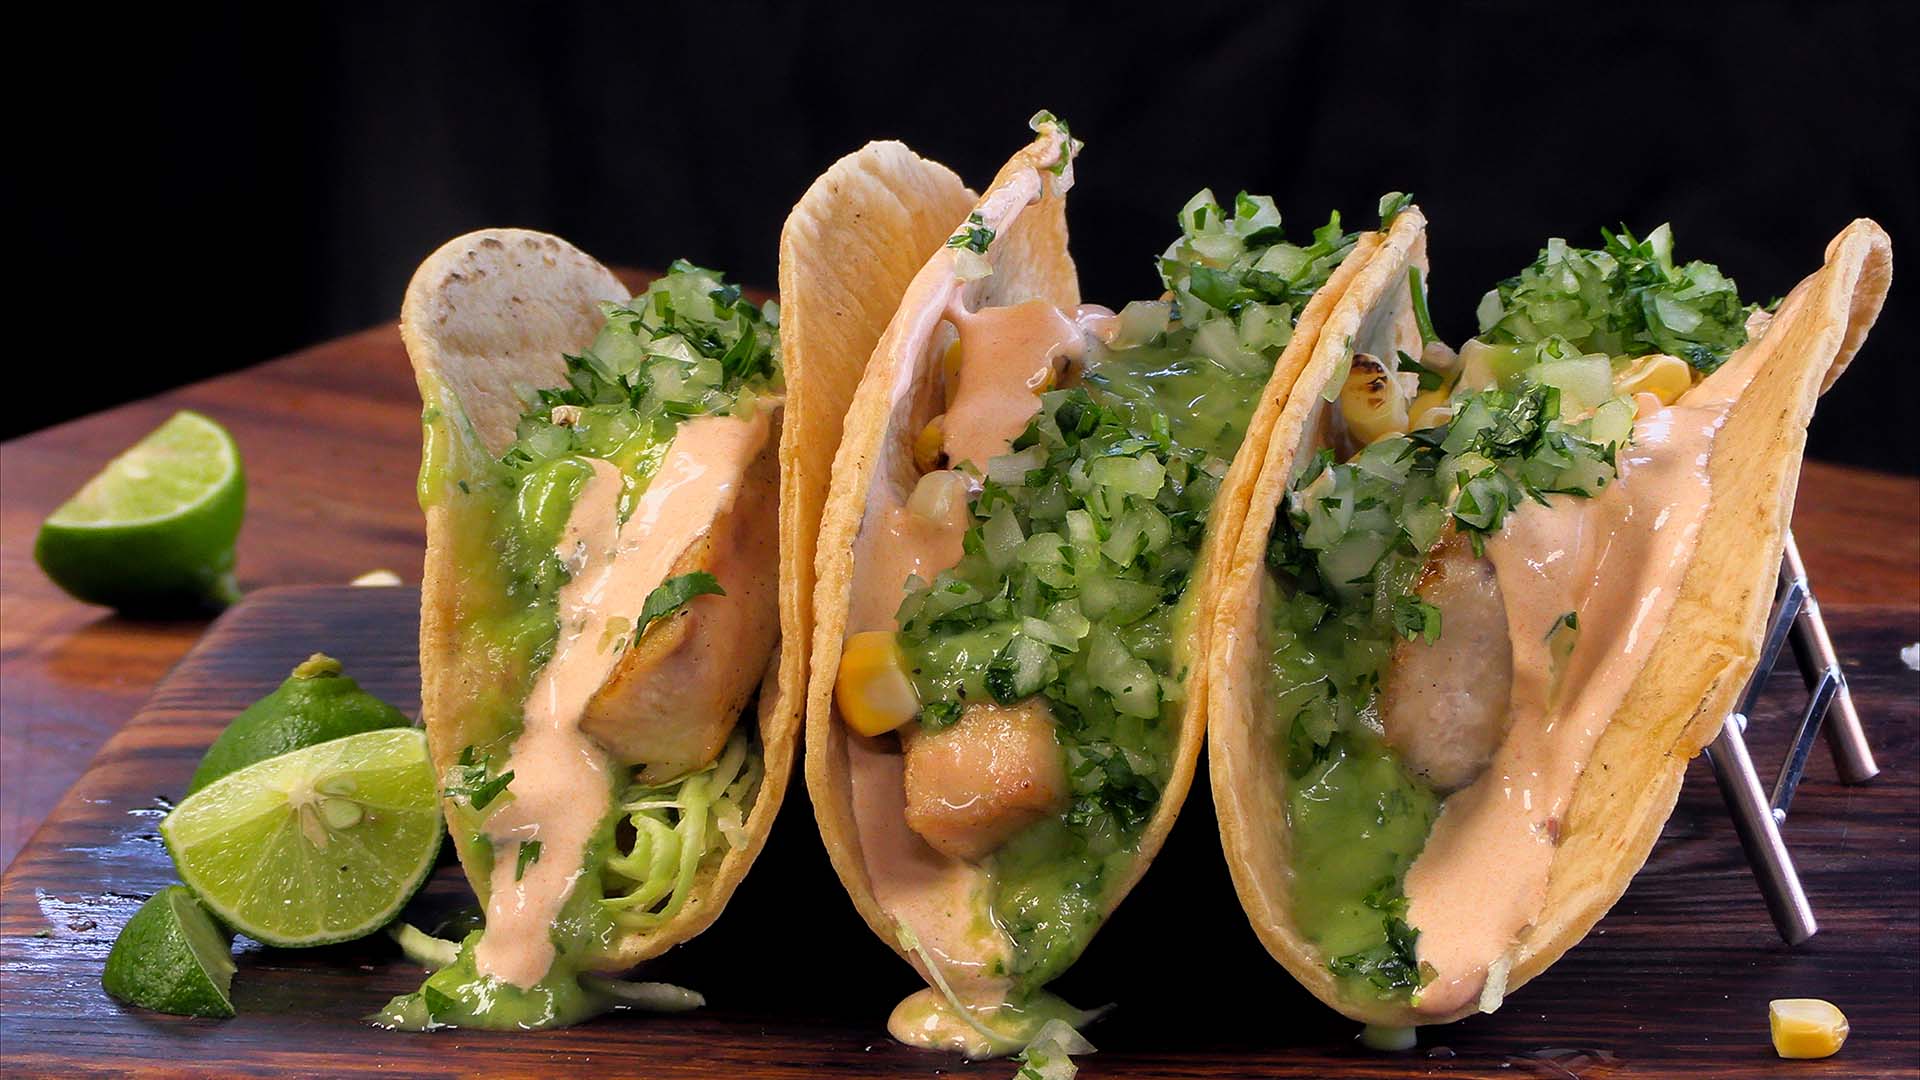 #4 - Mahi Mahi tacos with avocado salsa and spicy crema